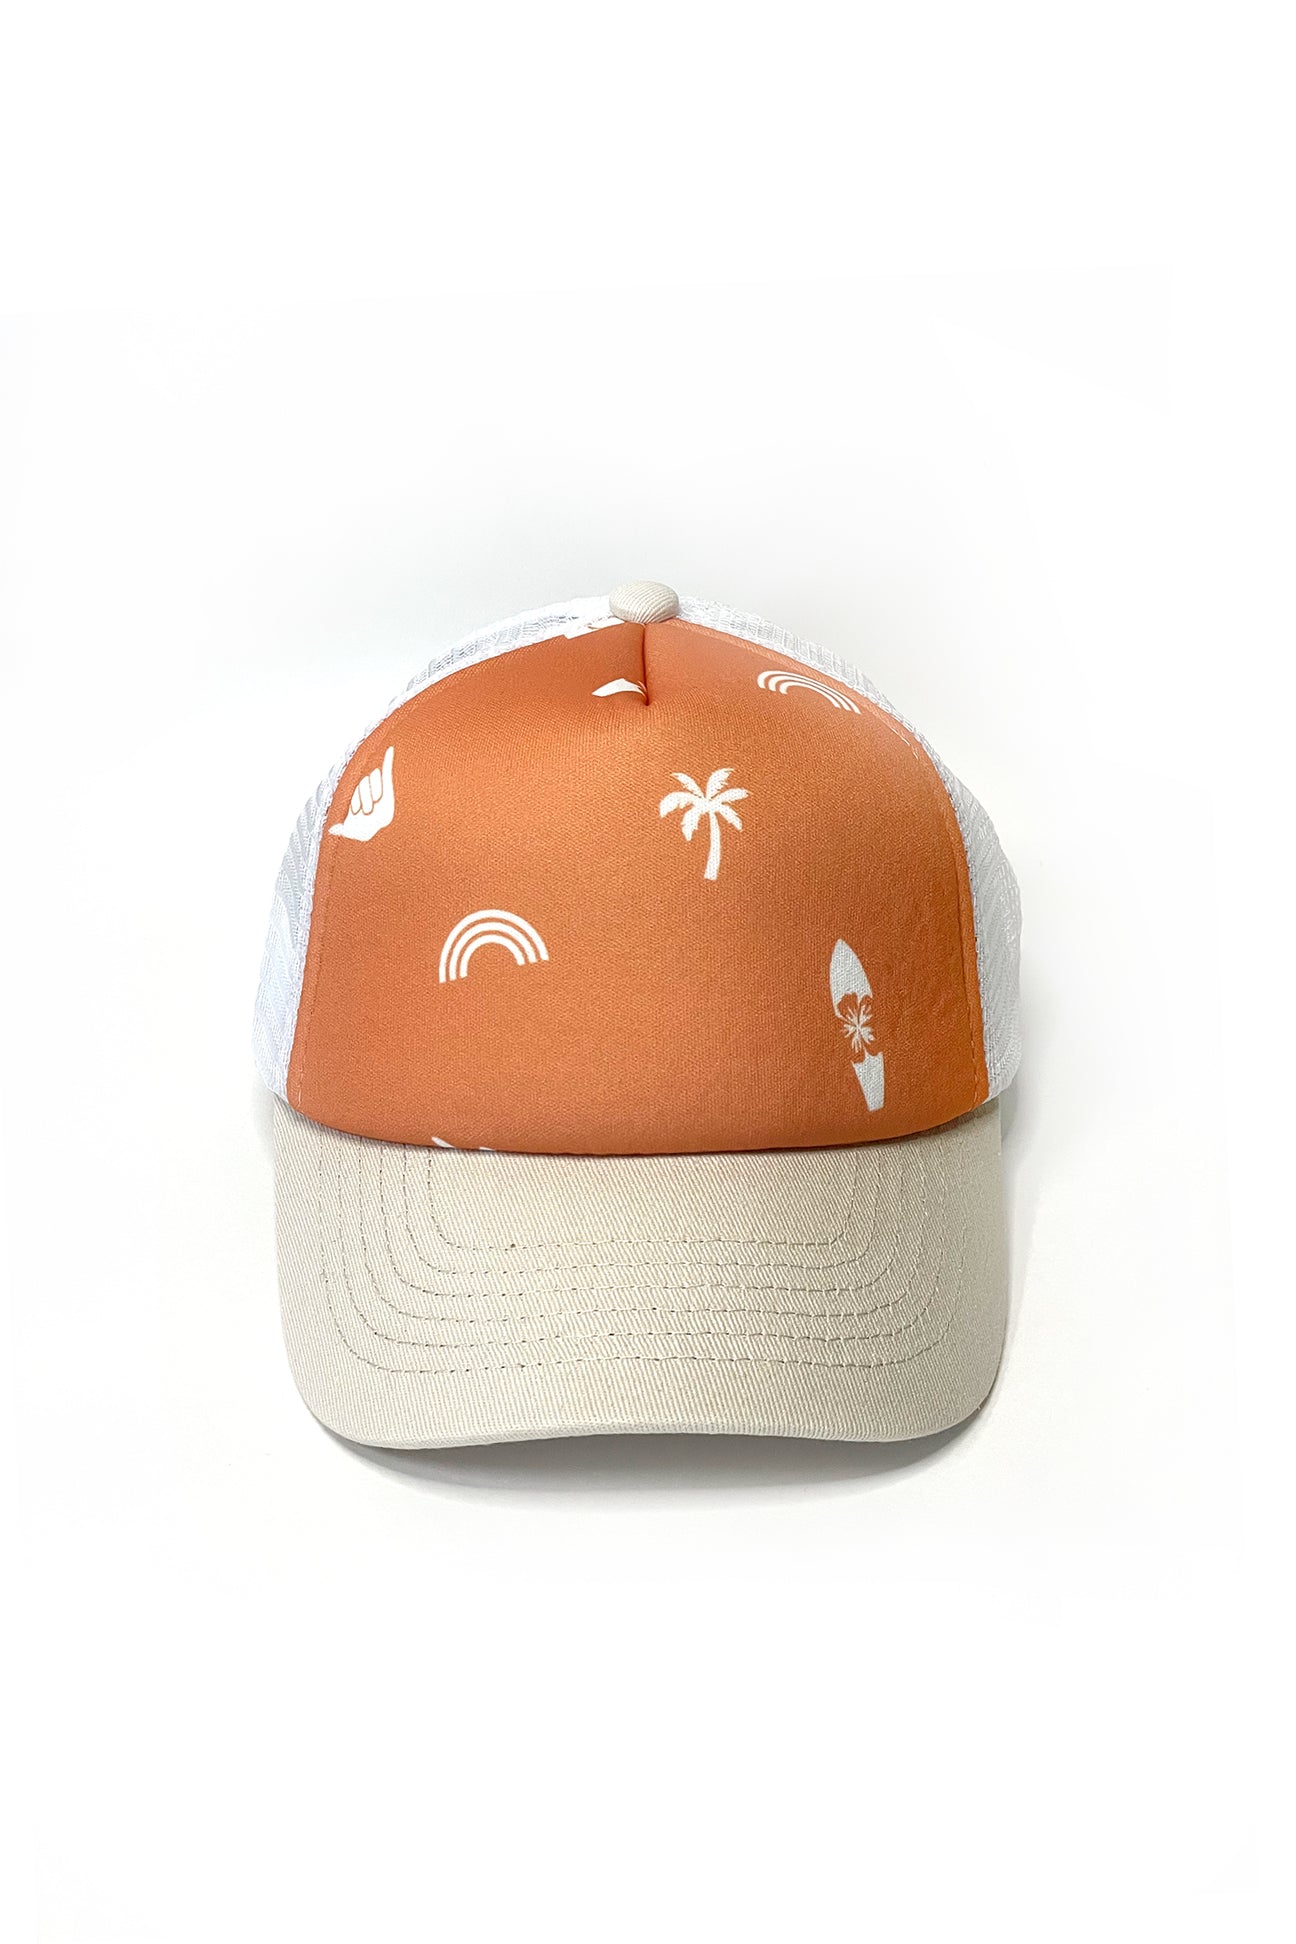 Keiki Trucker Hat - Terracotta Island Vibes